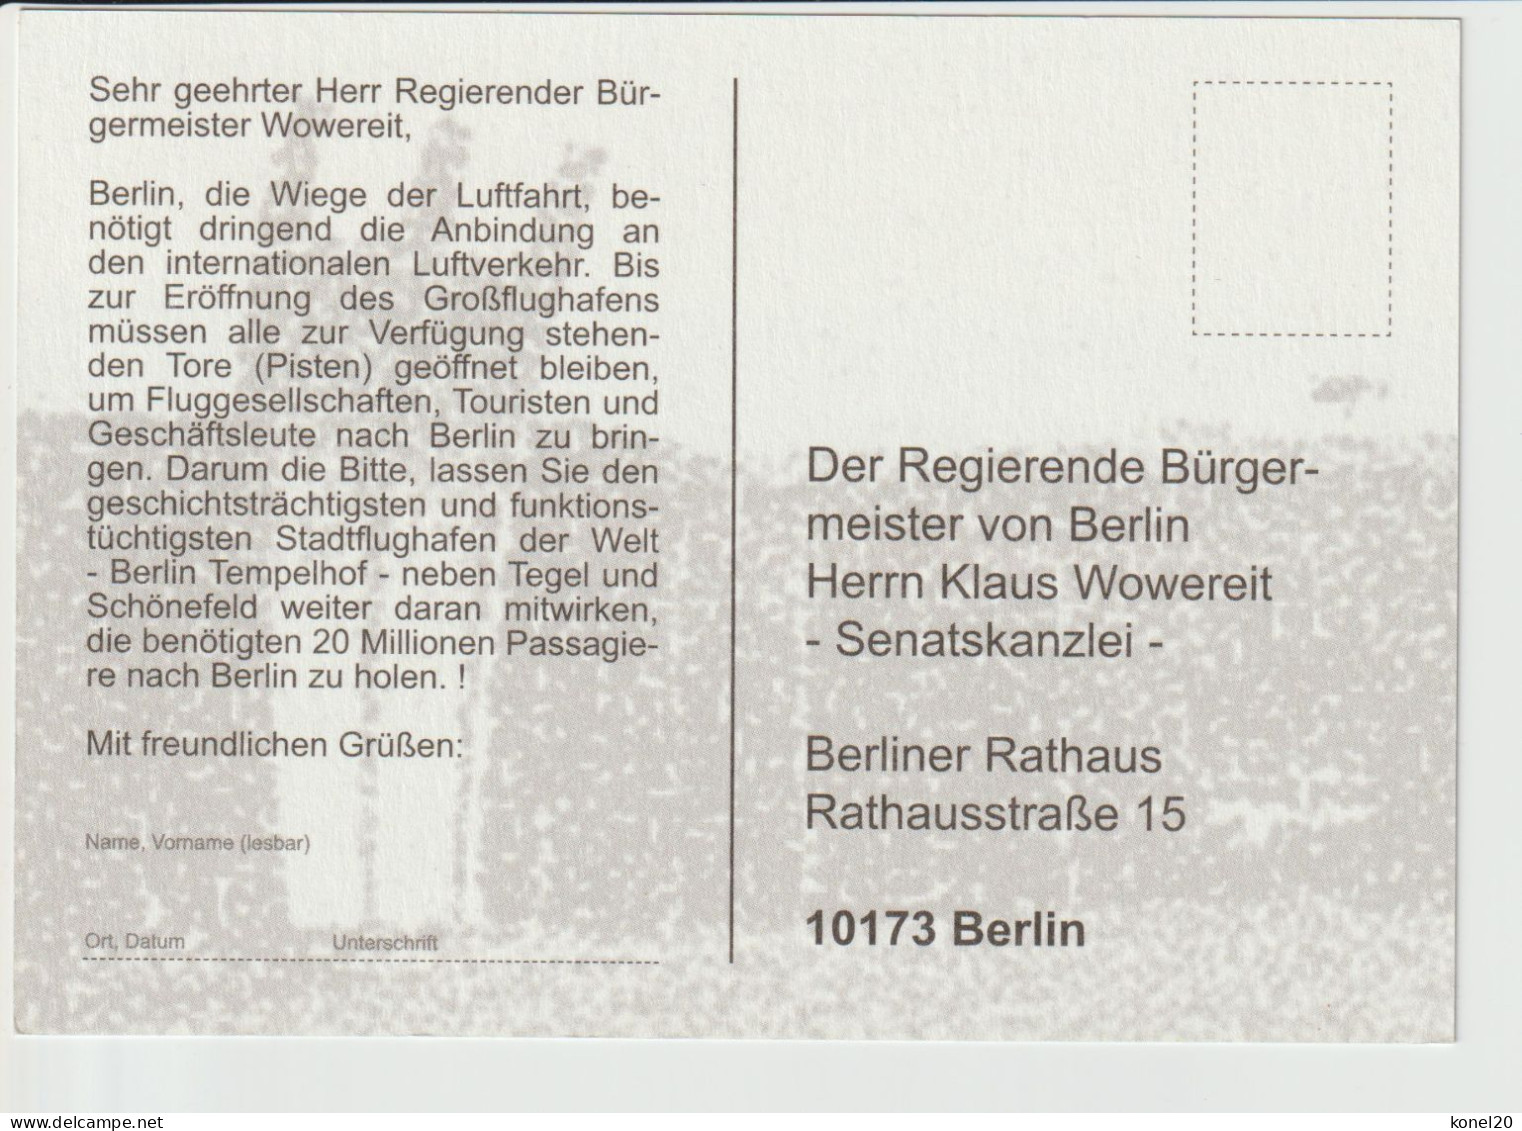 Pc To The Mayor Of Berlin To Keep Open Berlin Airport Tempelhof - 1919-1938